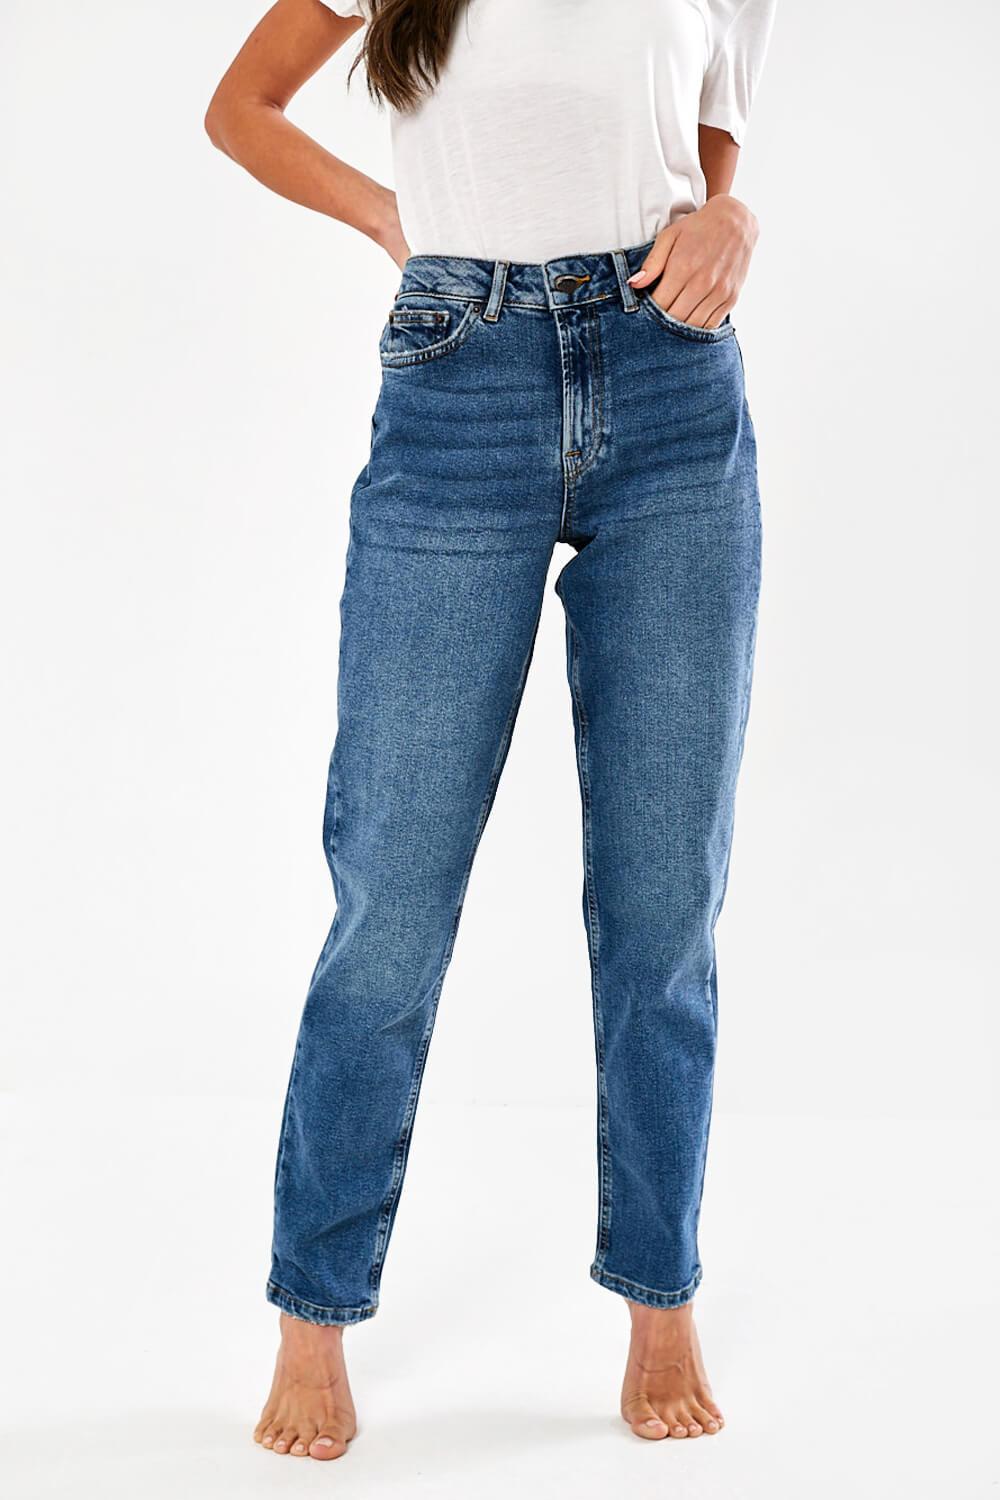 Vero Moda Straight Leg Jeans Top SAVE 40% mpgc.net